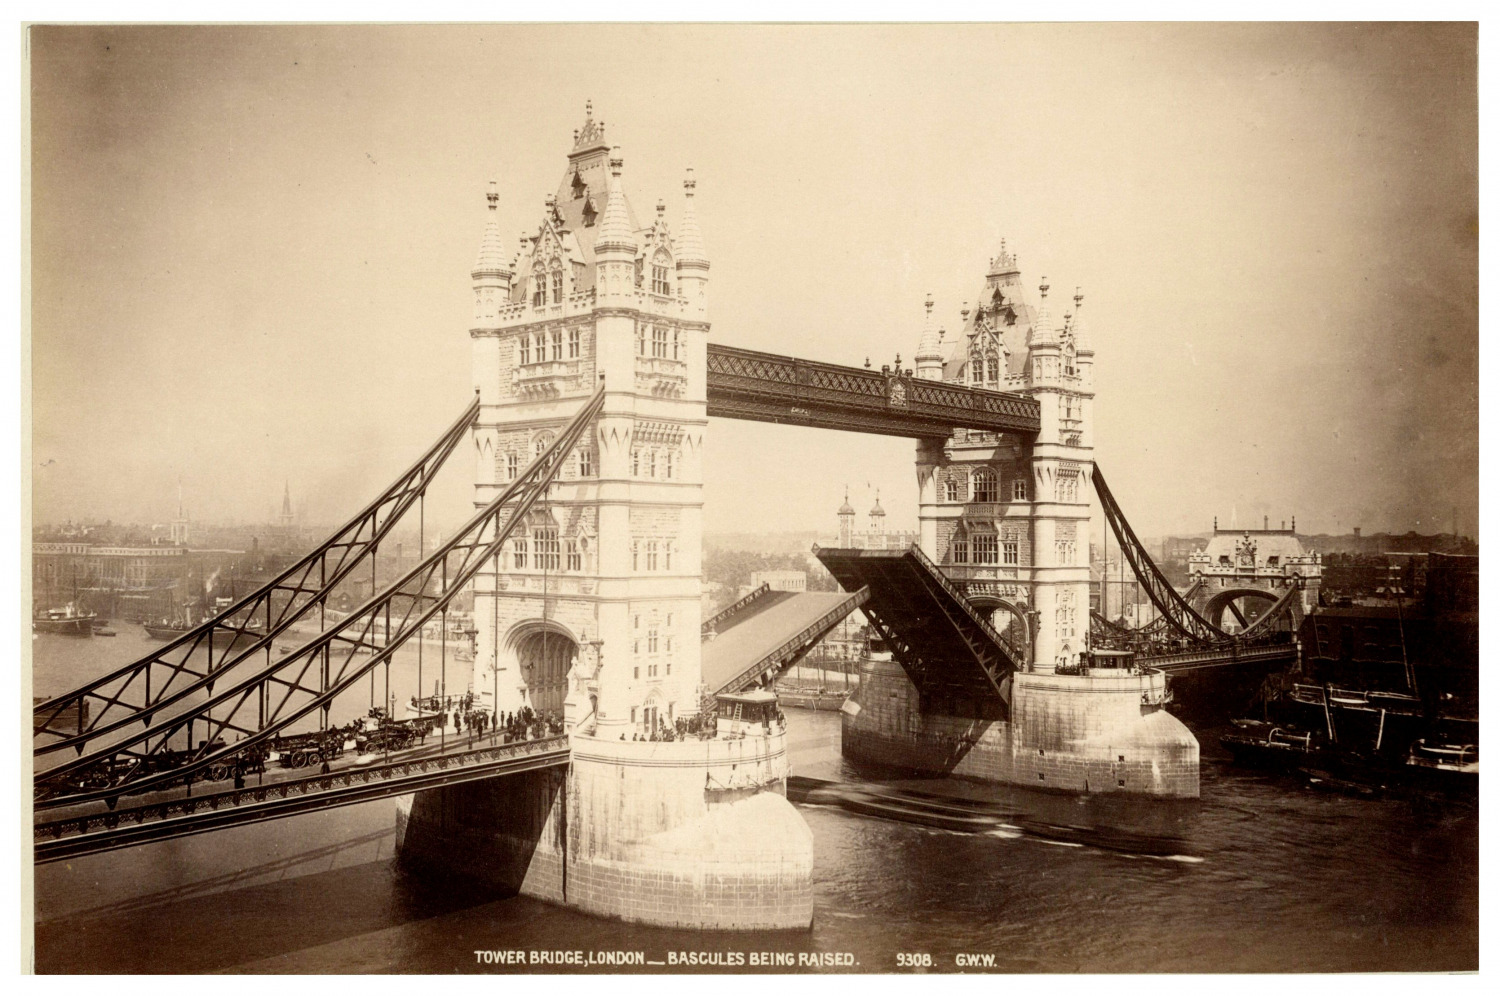 England, London, Tower Bridge, bascules being raised, photo. G.W.W. Vintage Prin